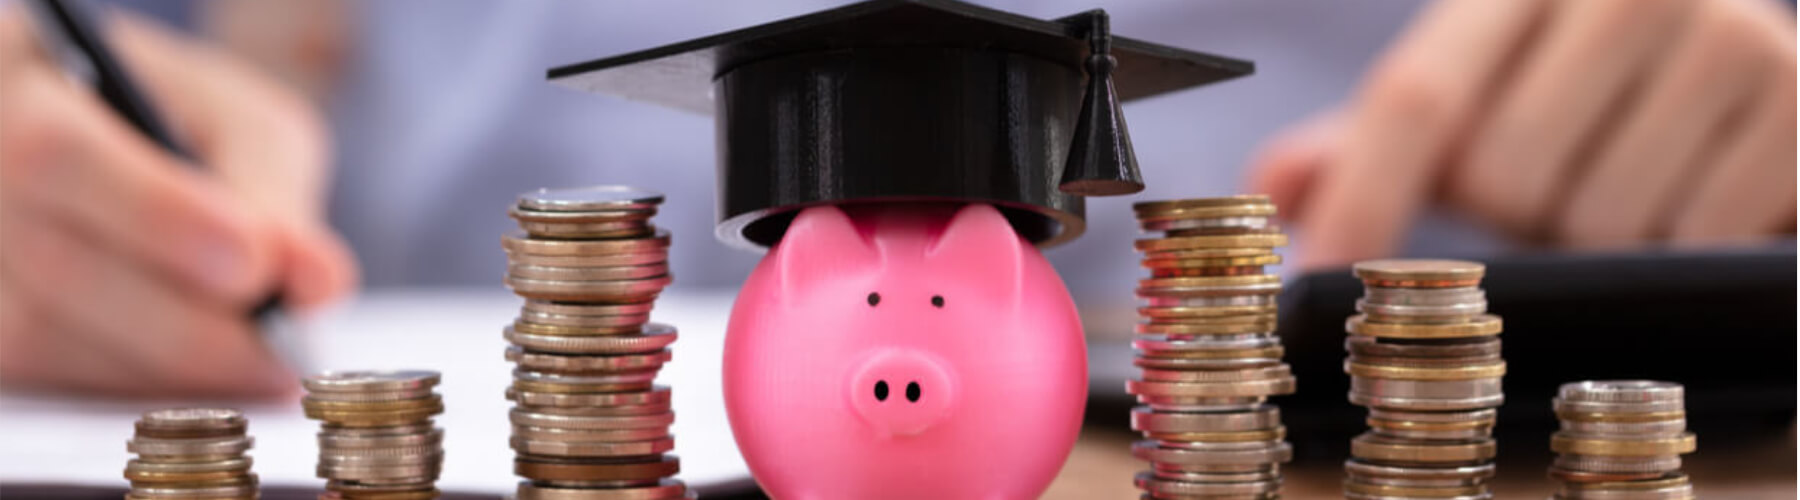 education budget concept, piggy bank, graduation cap